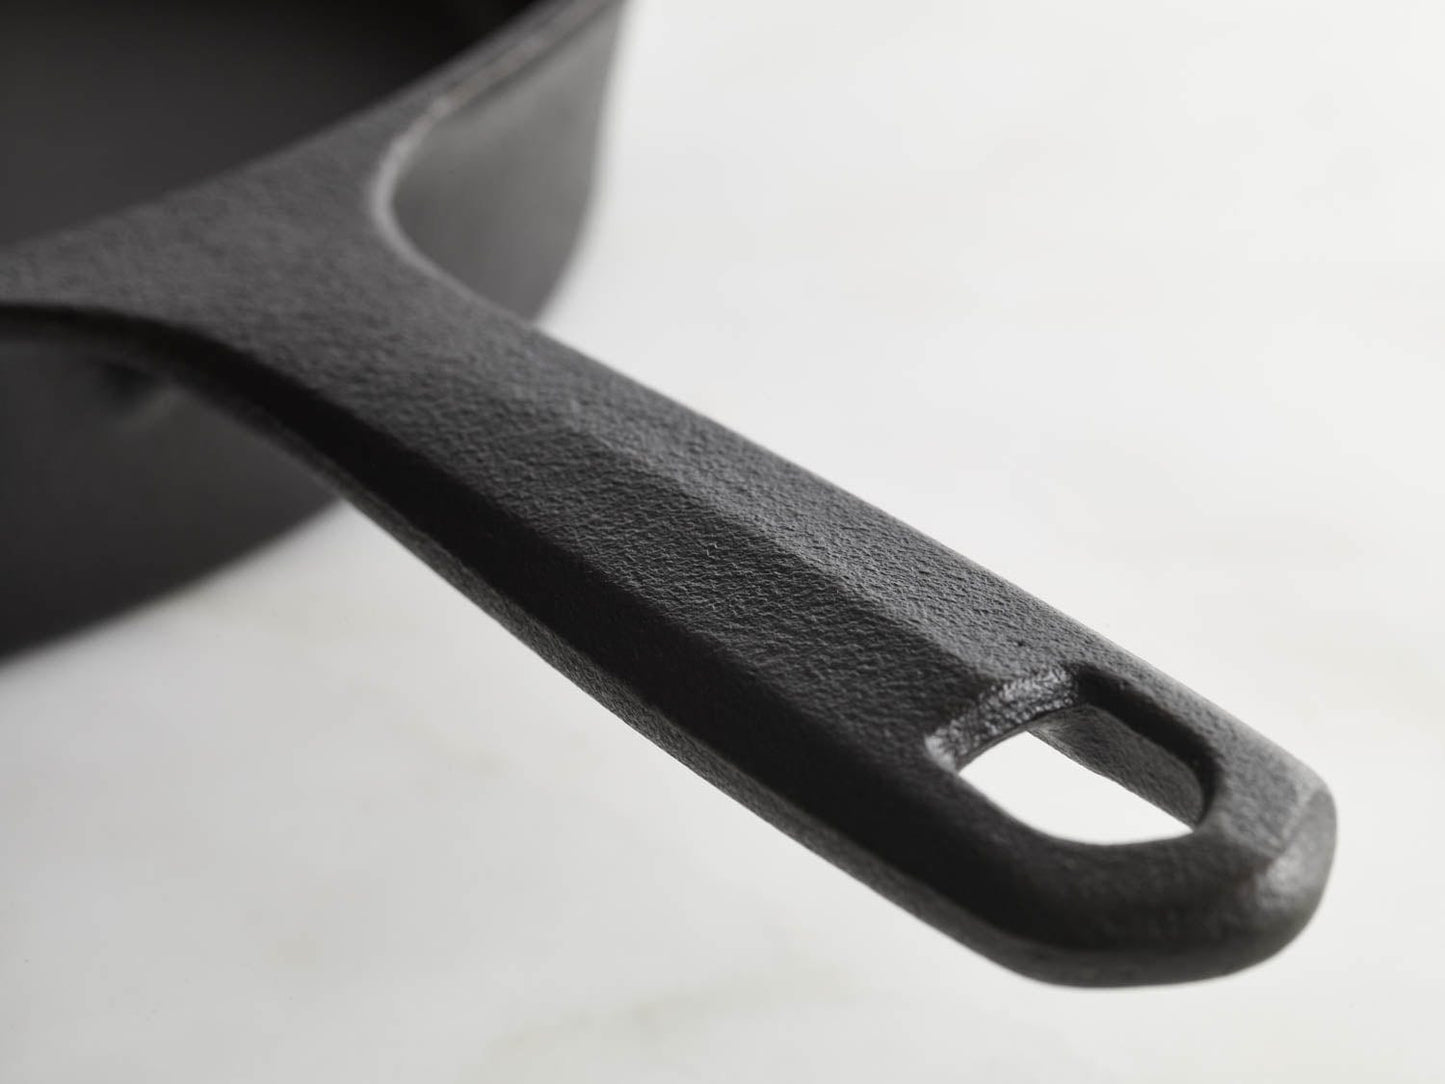 close up of no 8 cast iron skillet handle